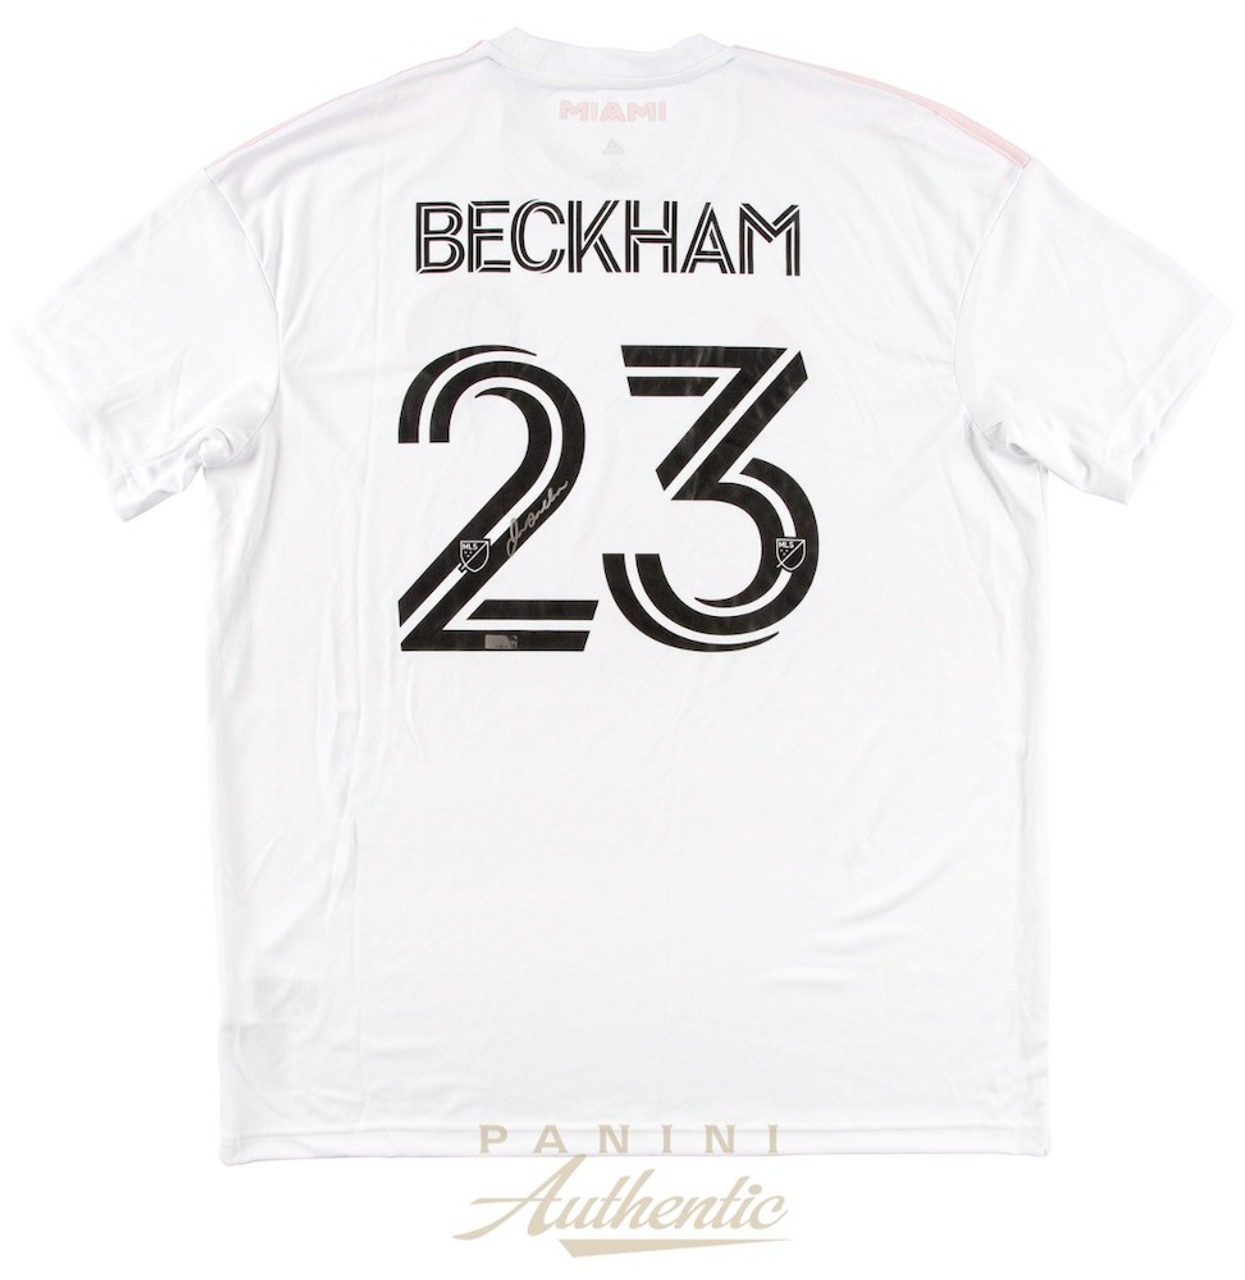 DAVID BECKHAM Autographed Inter Miami CF Adidas 2021 White Jersey PANINI -  Game Day Legends